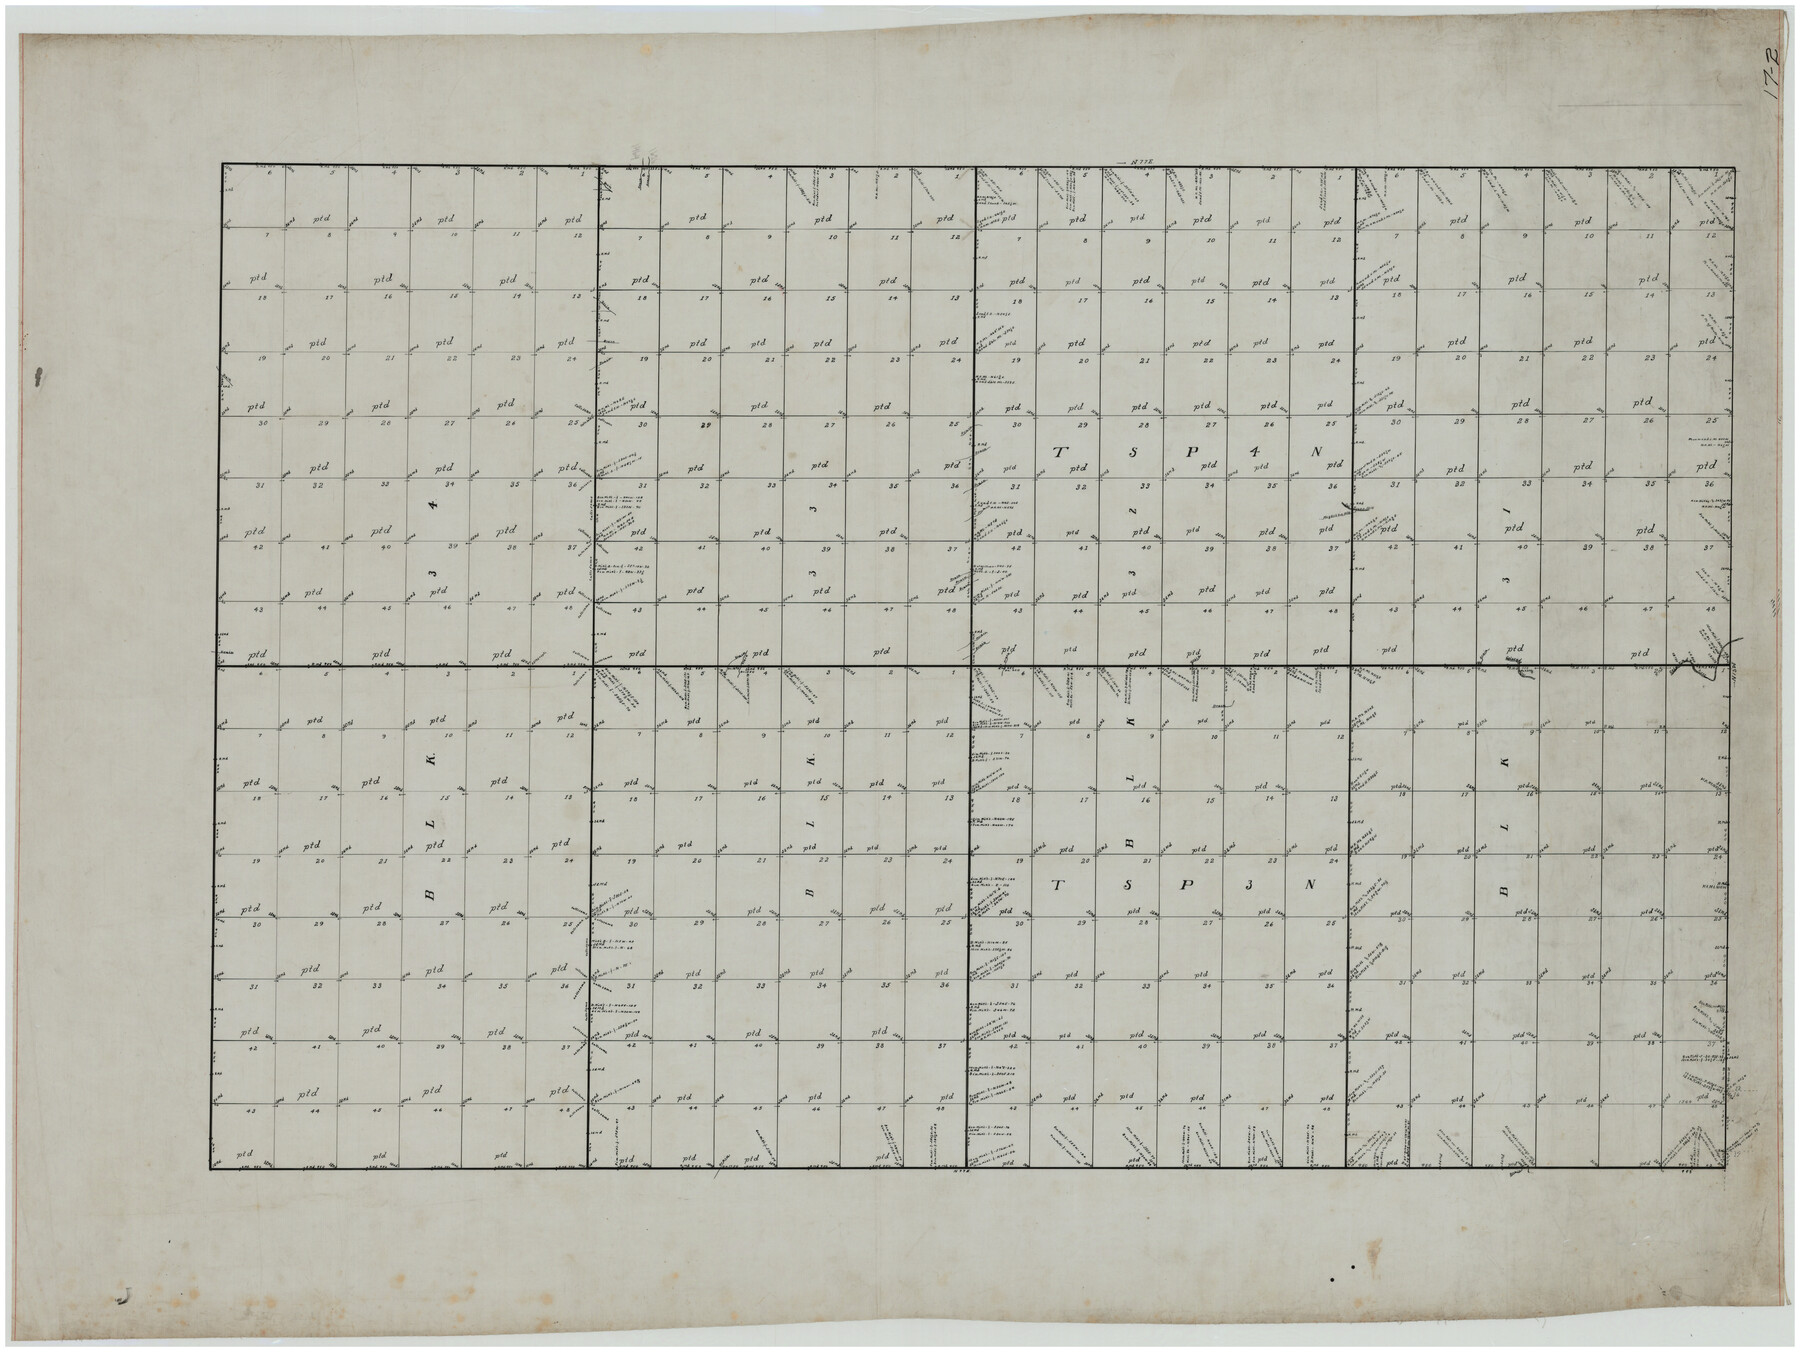 89746, [Sketch of T.&P. Blocks 31-34, Tsp. 3N & 4N], Twichell Survey Records